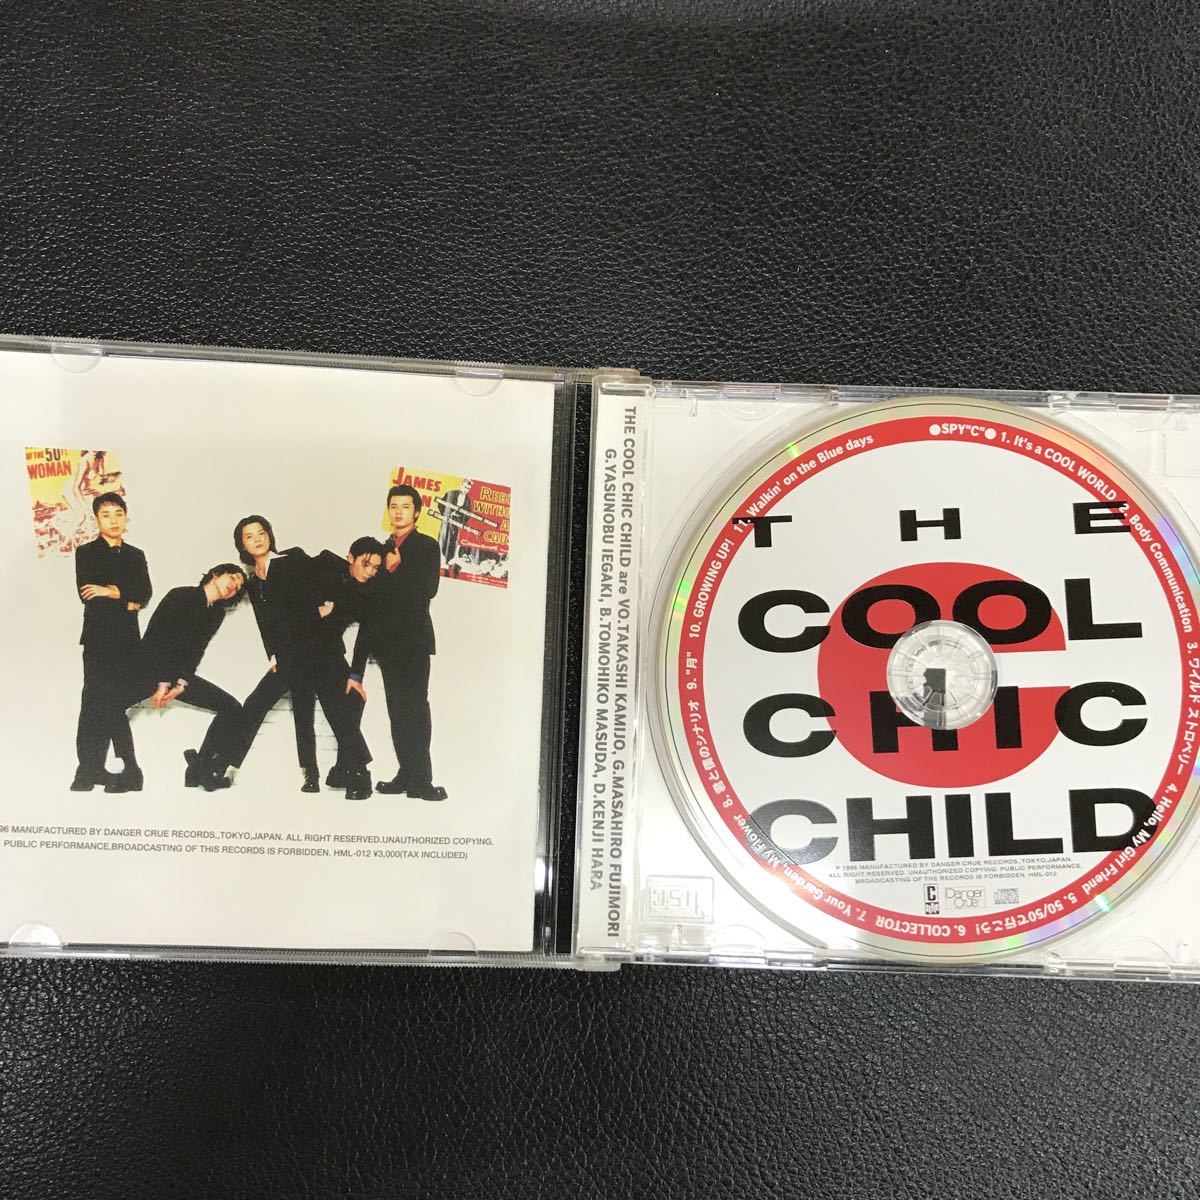 CD 中古☆【邦楽】THE COOL CHIC CHILD SPY'C'